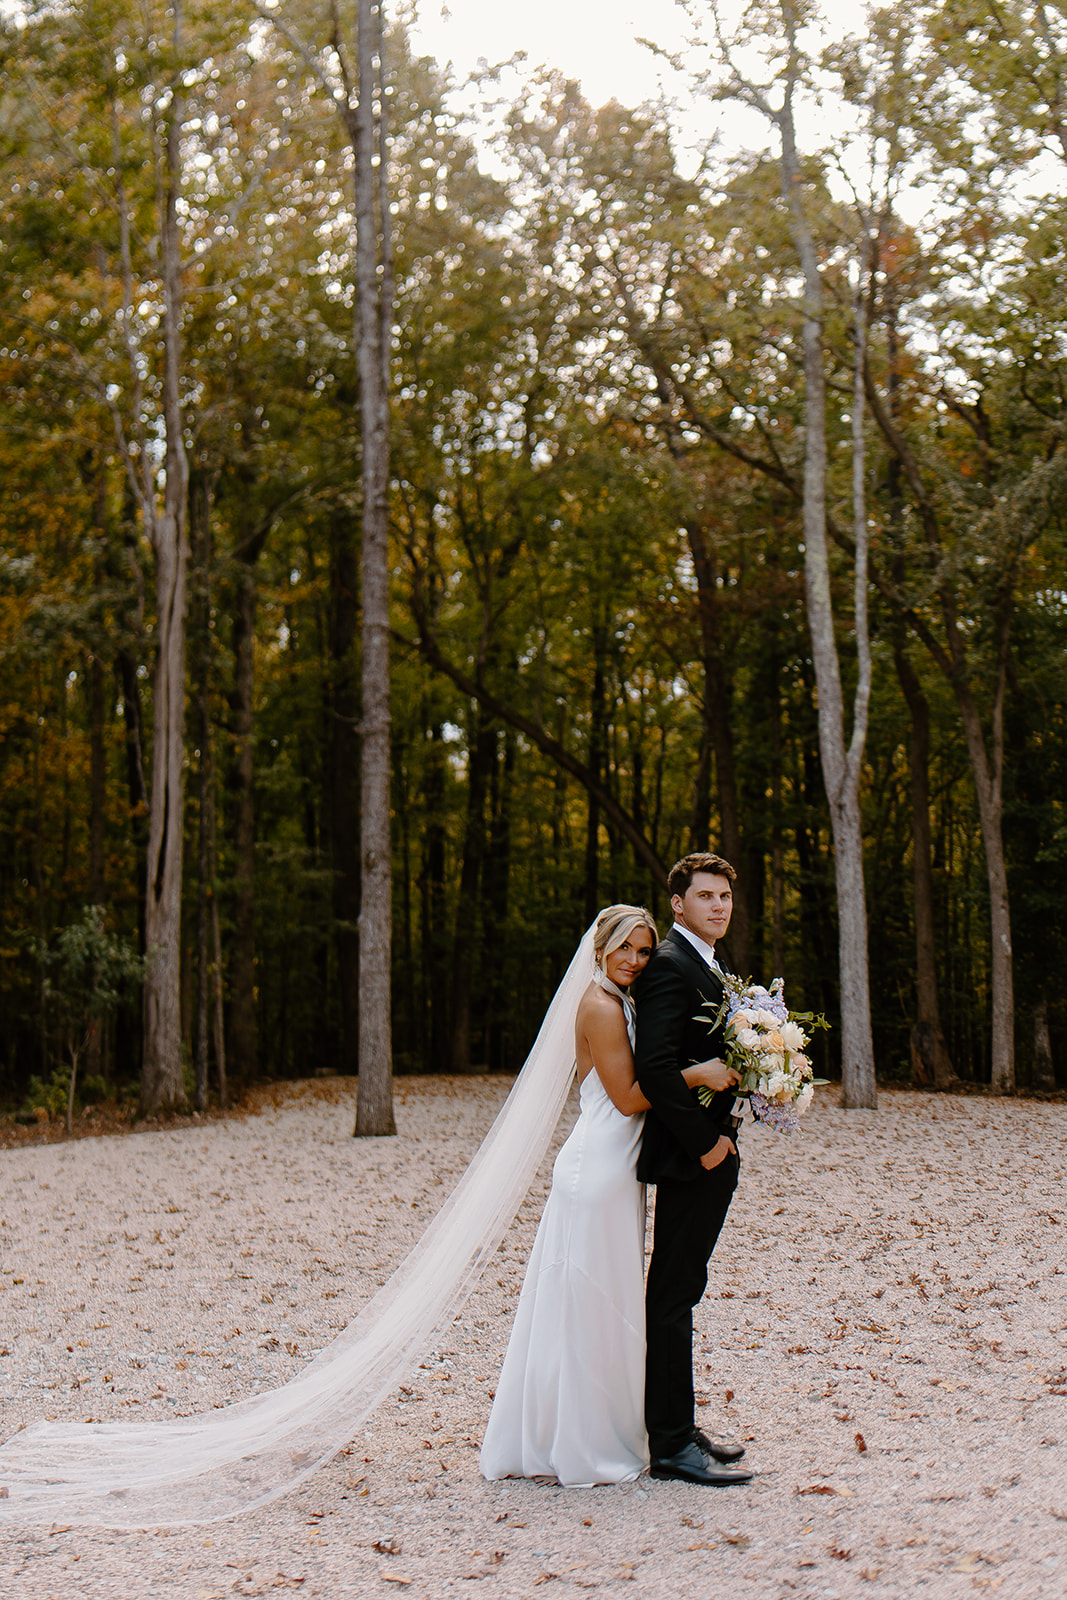 North Carolina wedding photographers, North Carolina wedding venues, white barn wedding venue Carolina Grove wedding 